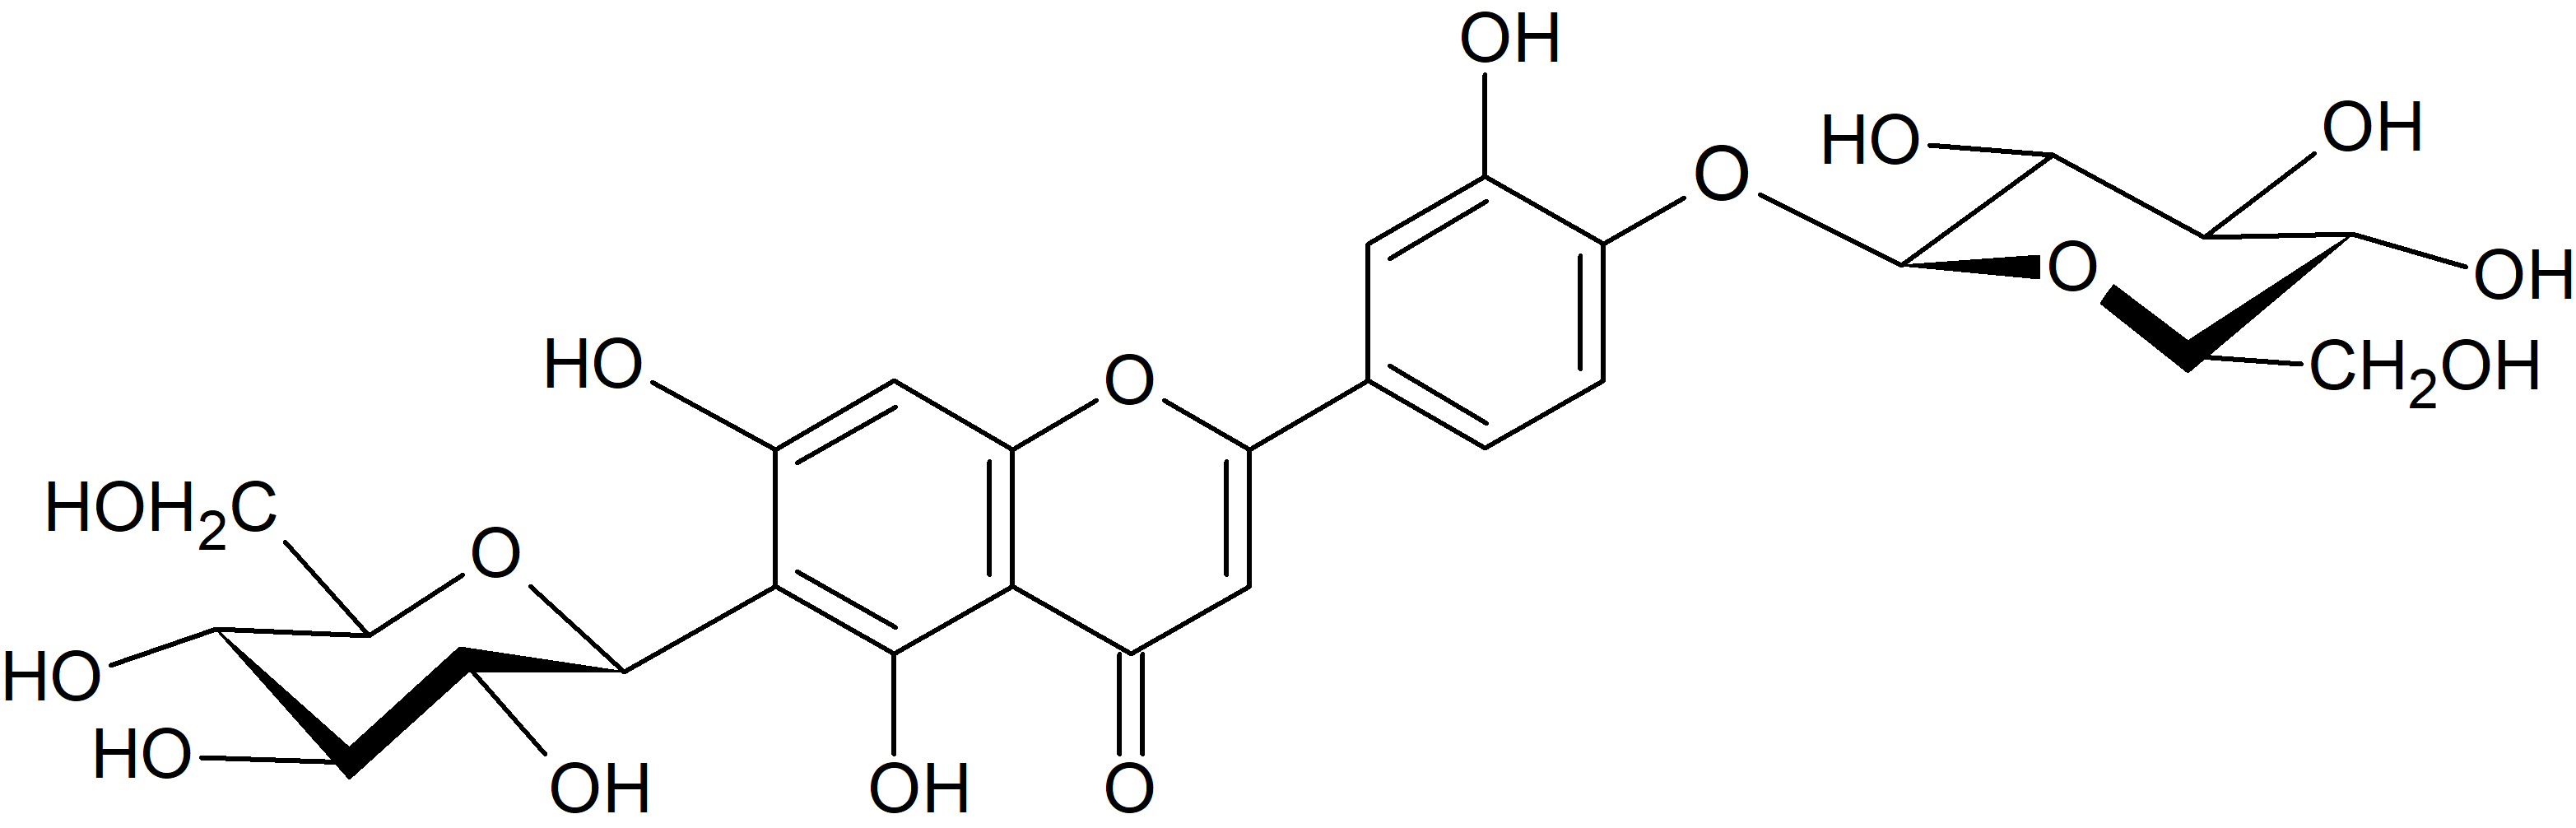 Isoorientin 4'-O-glucoside